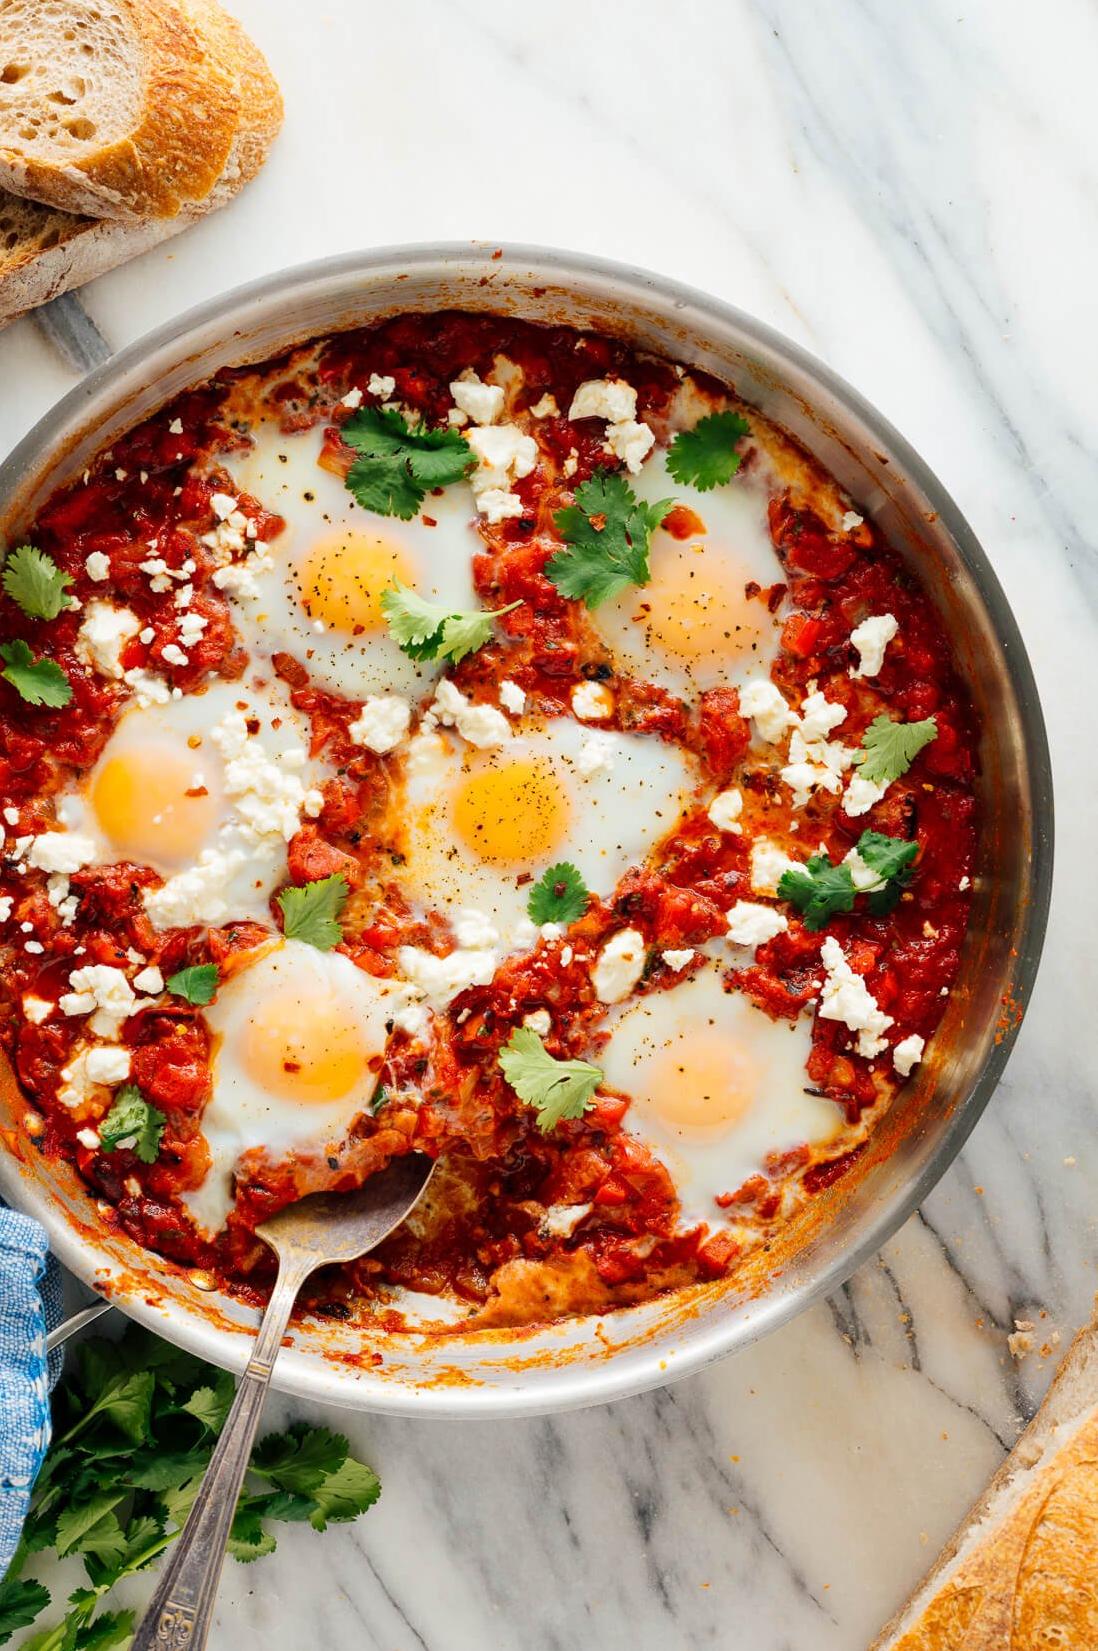  A Middle Eastern twist on eggs for breakfast